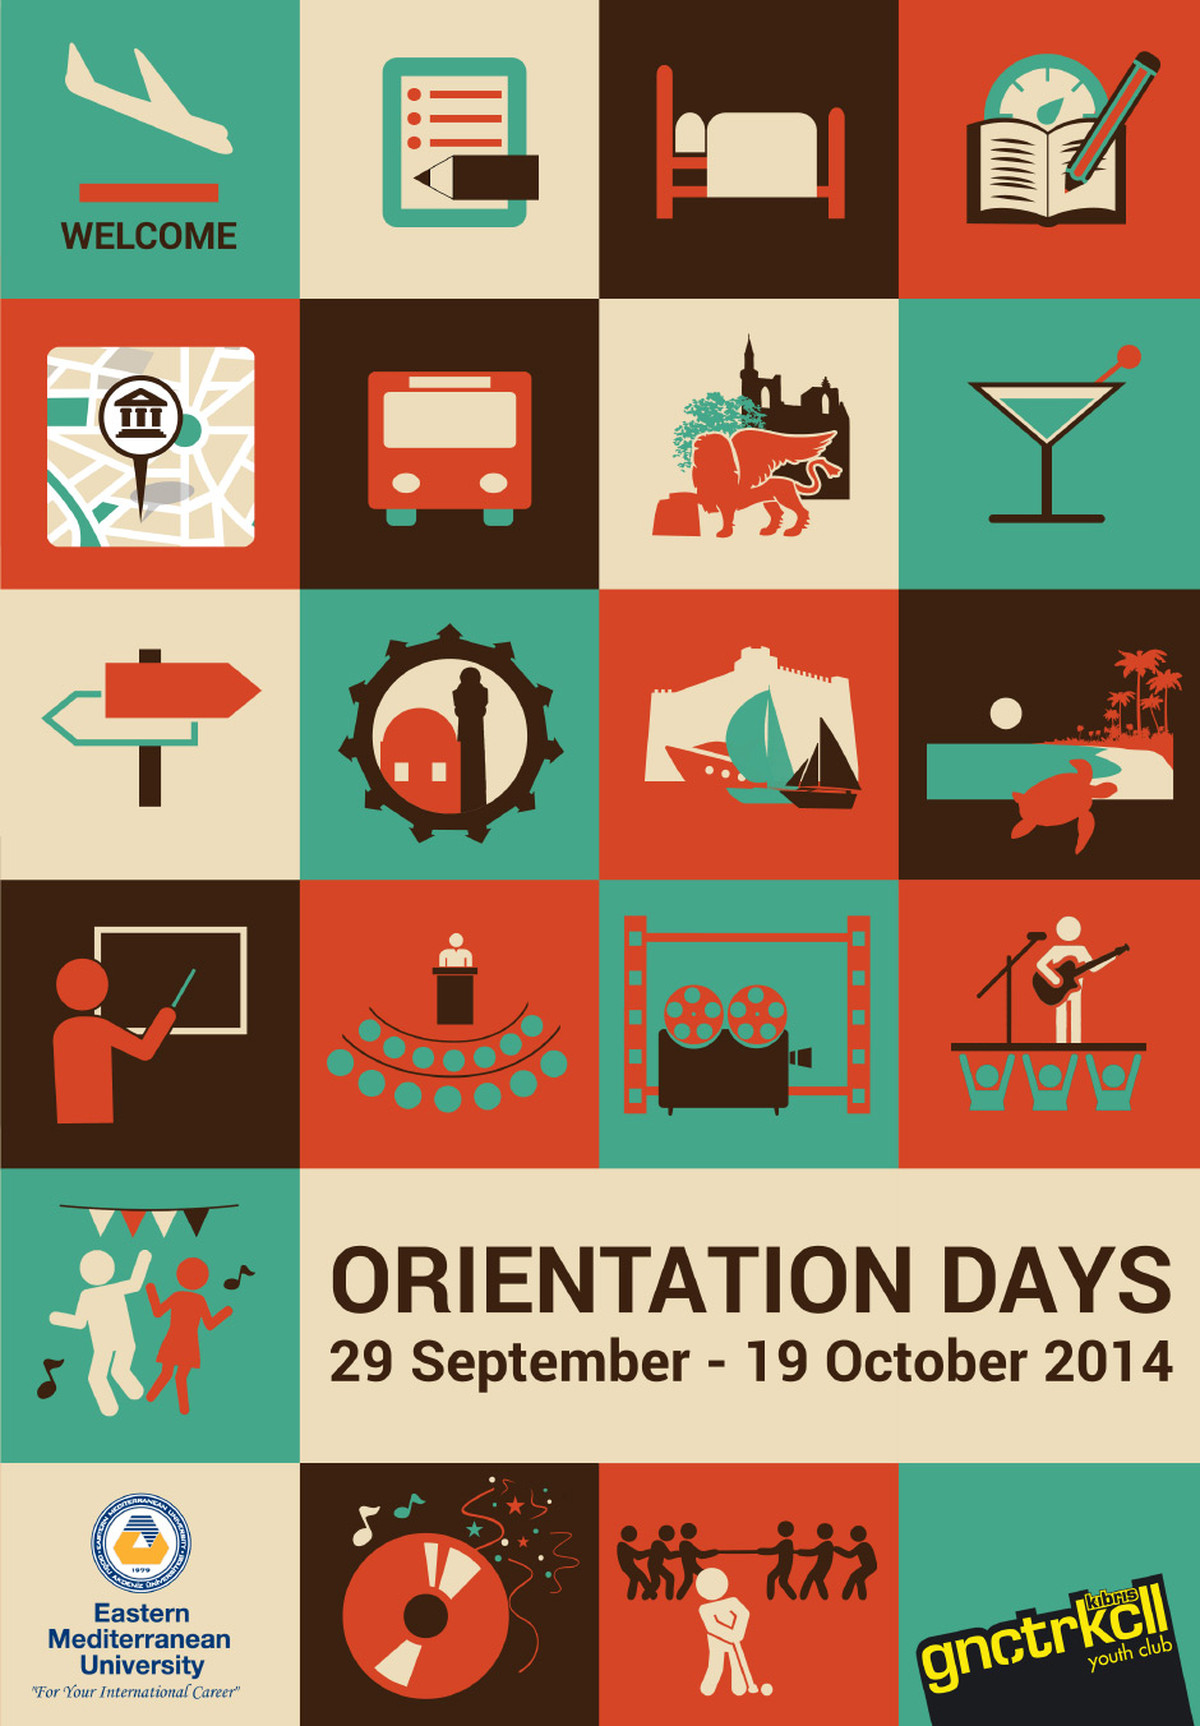 Orientation Days 29 September - 19 October 2014